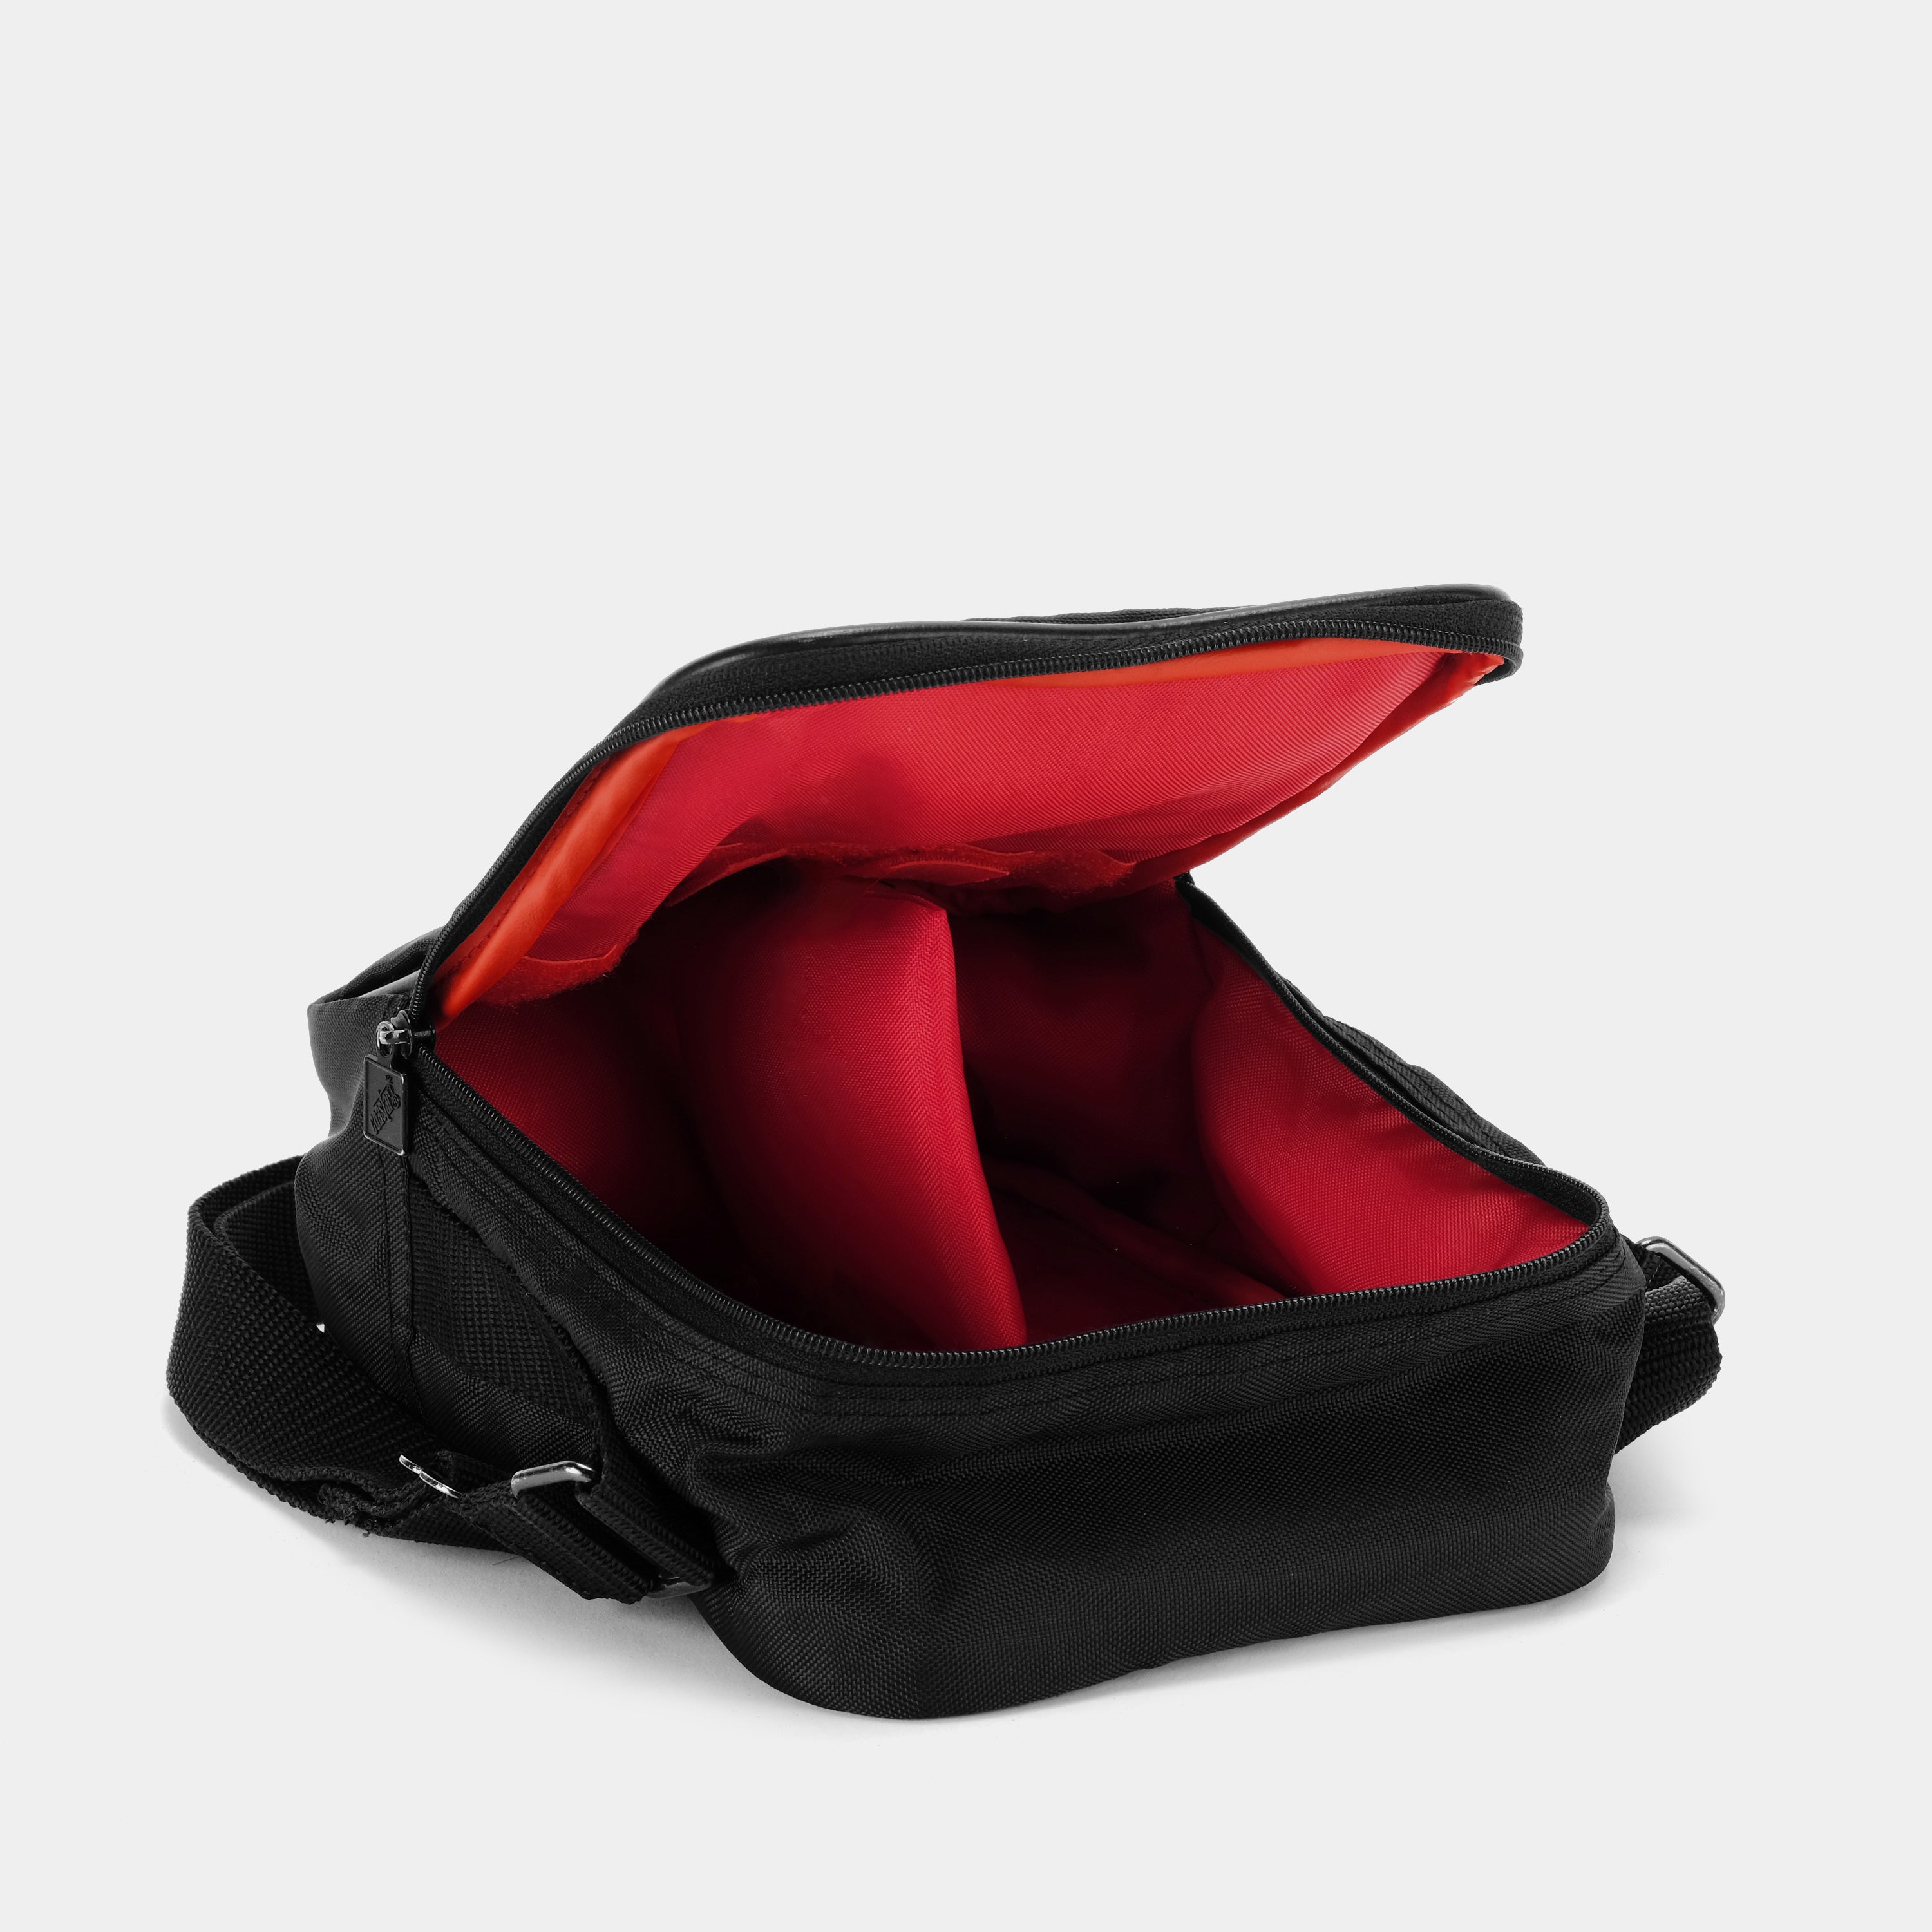 Coastar Black with Red Stripe Instant Camera Bag